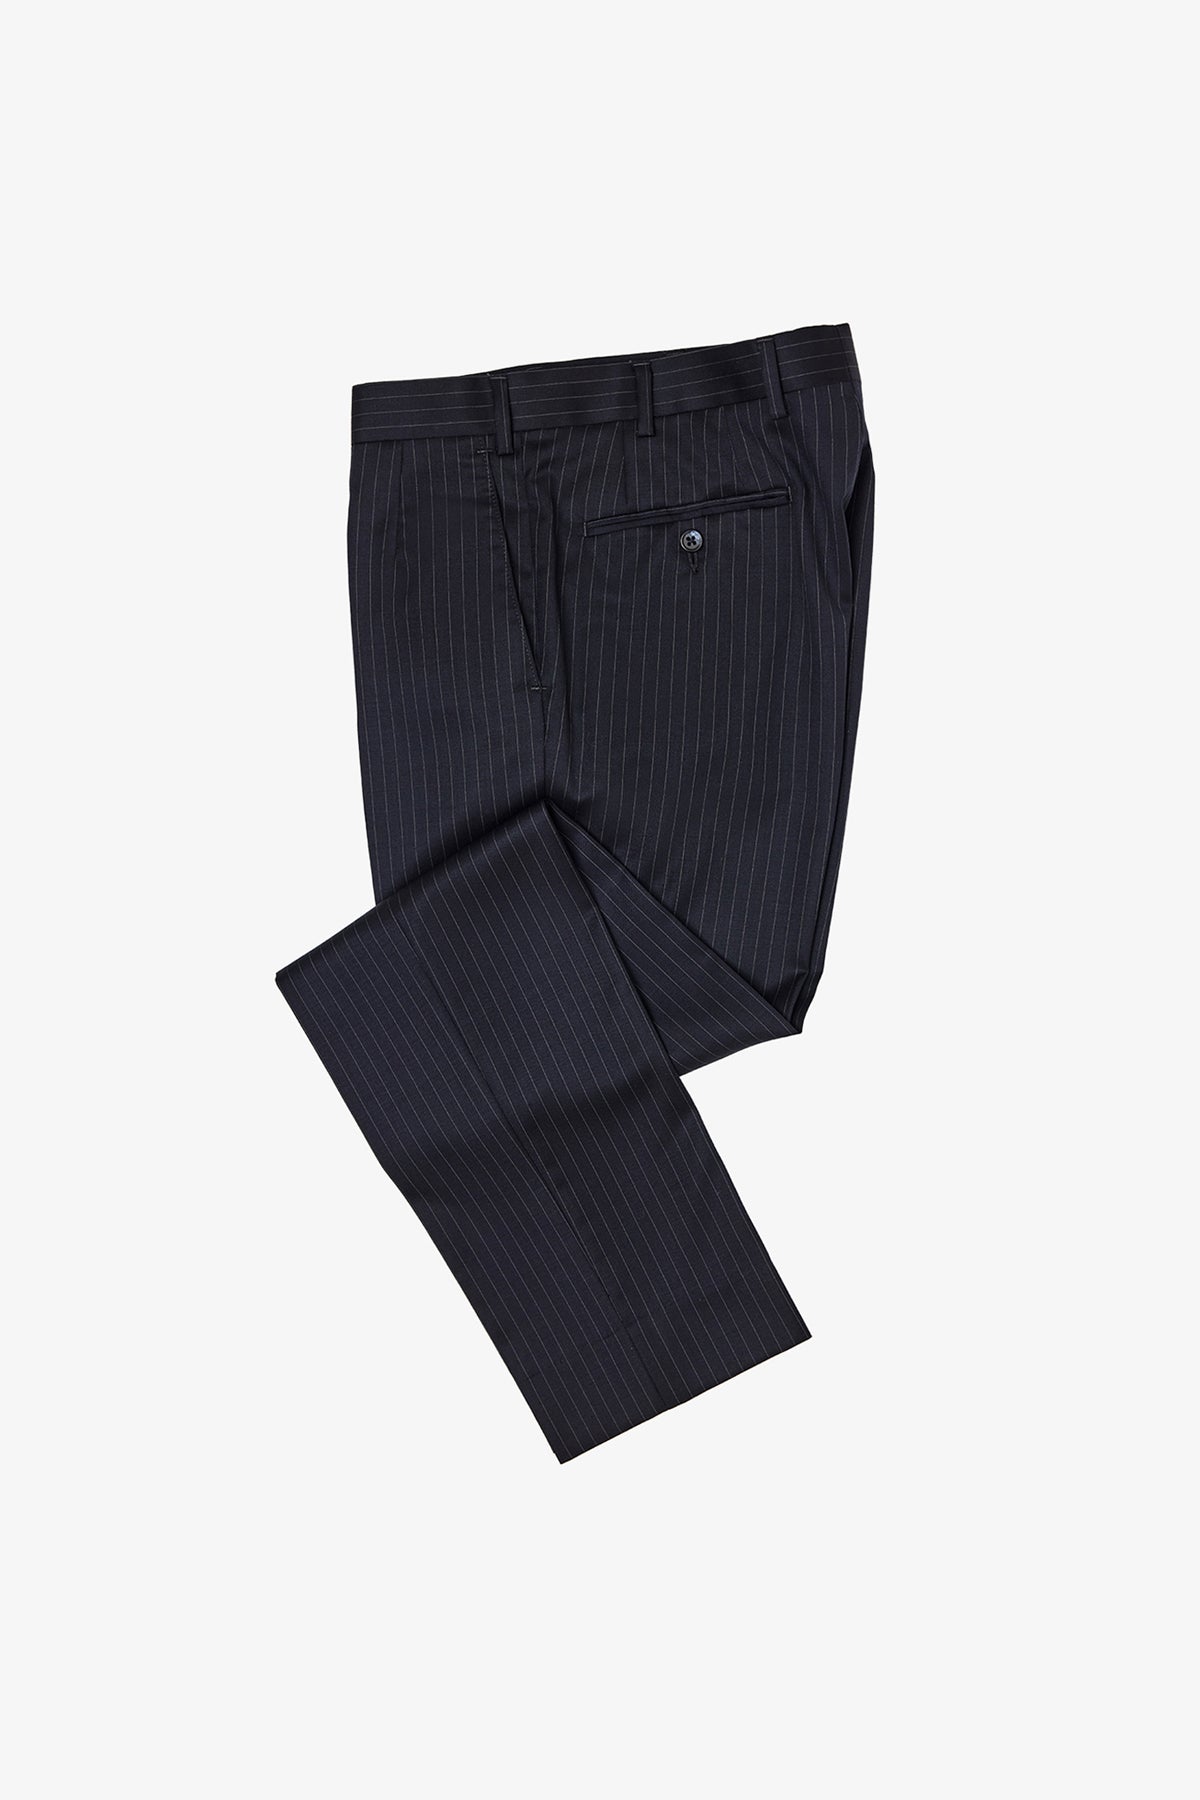 Montclair - Navy Trouser